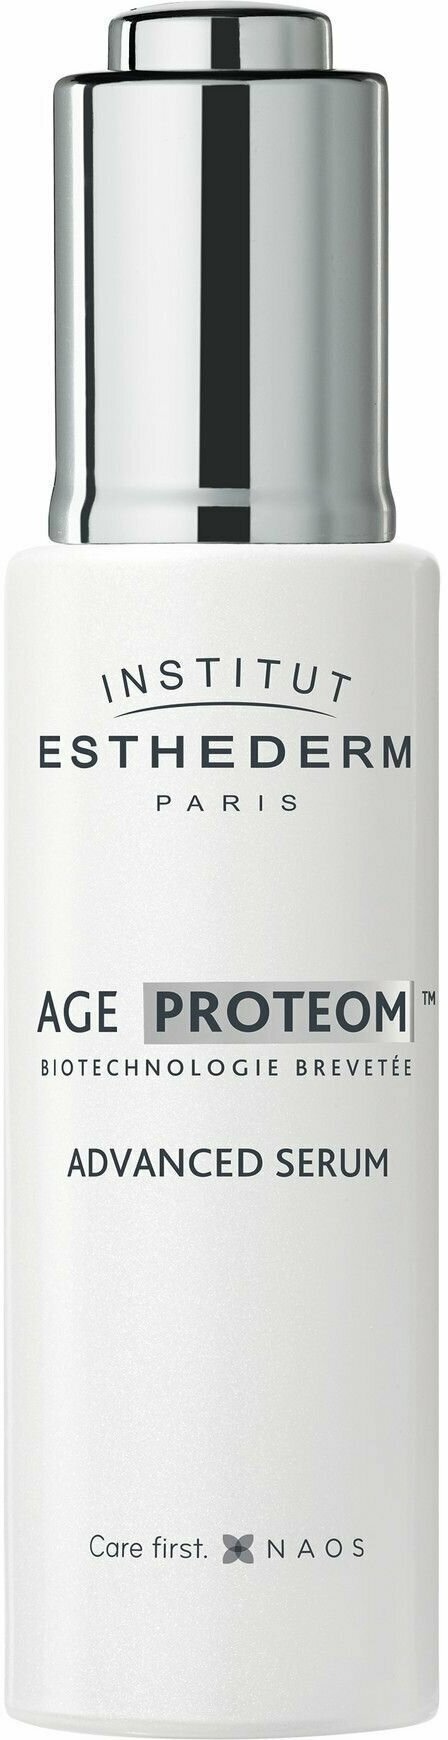 INSTITUT ESTHEDERM Сыворотка для продления молодости кожи Age Proteom